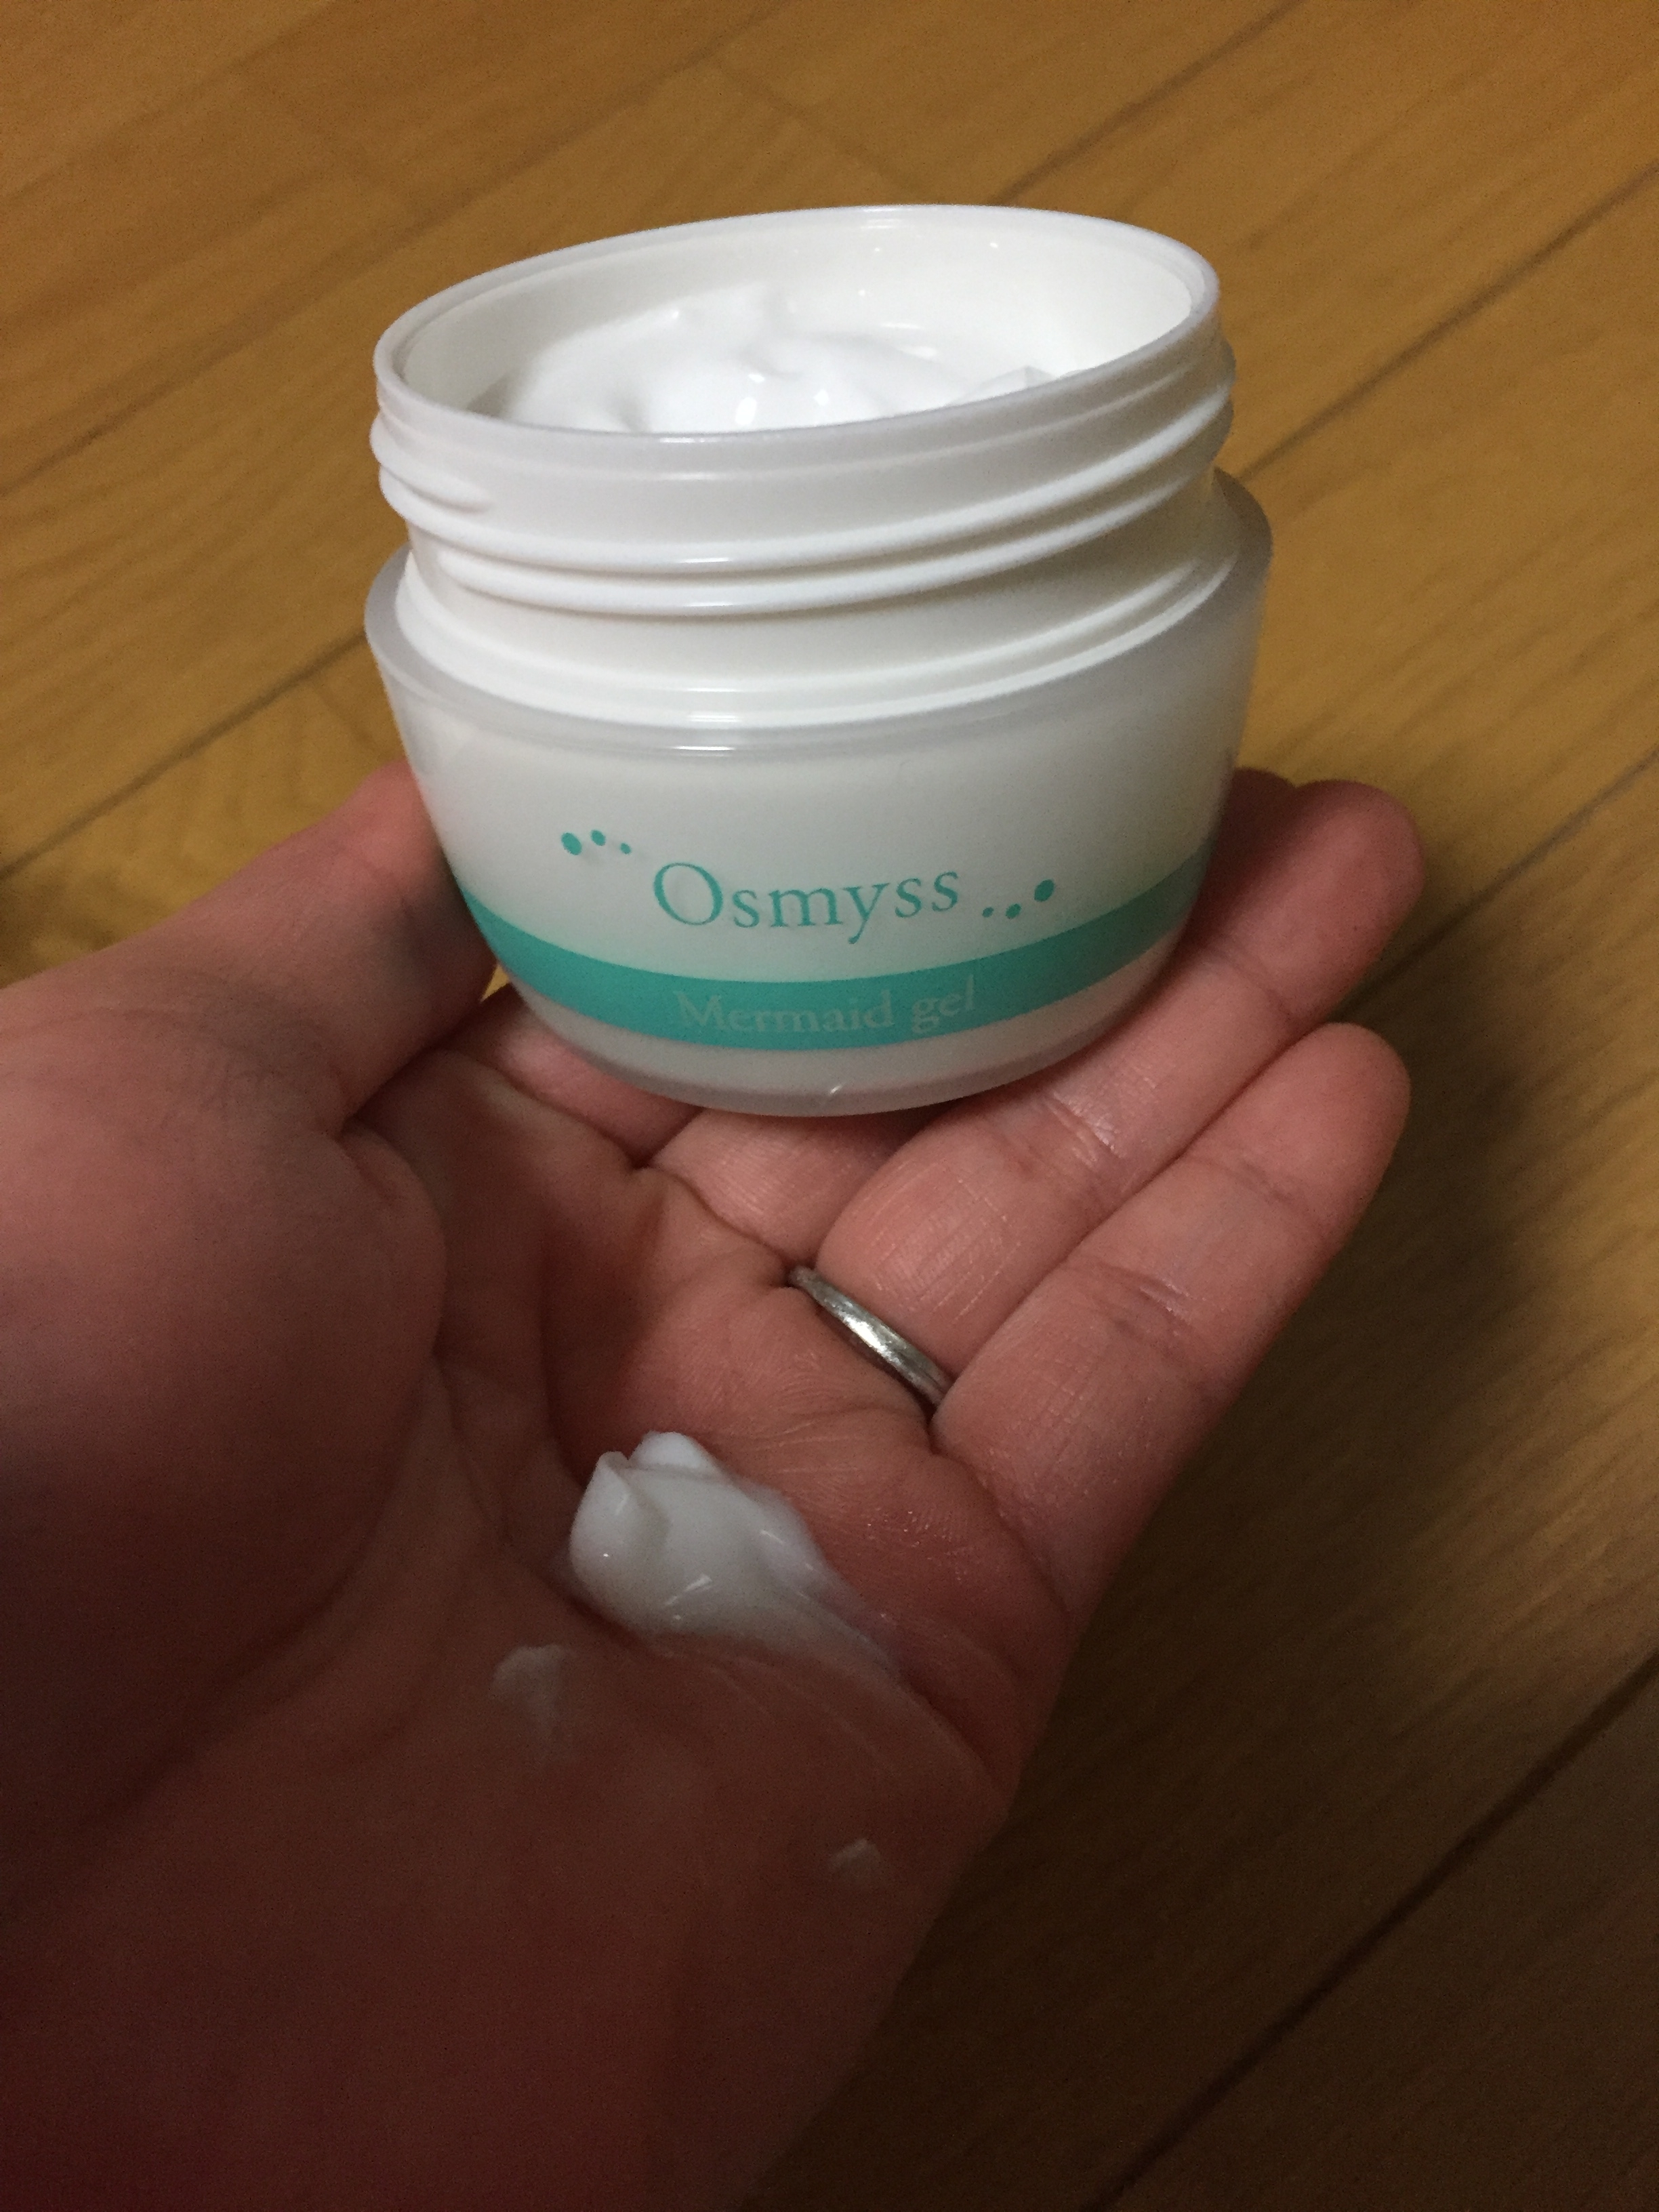 Osmyss / Mermaid gelの公式商品情報｜美容・化粧品情報はアットコスメ